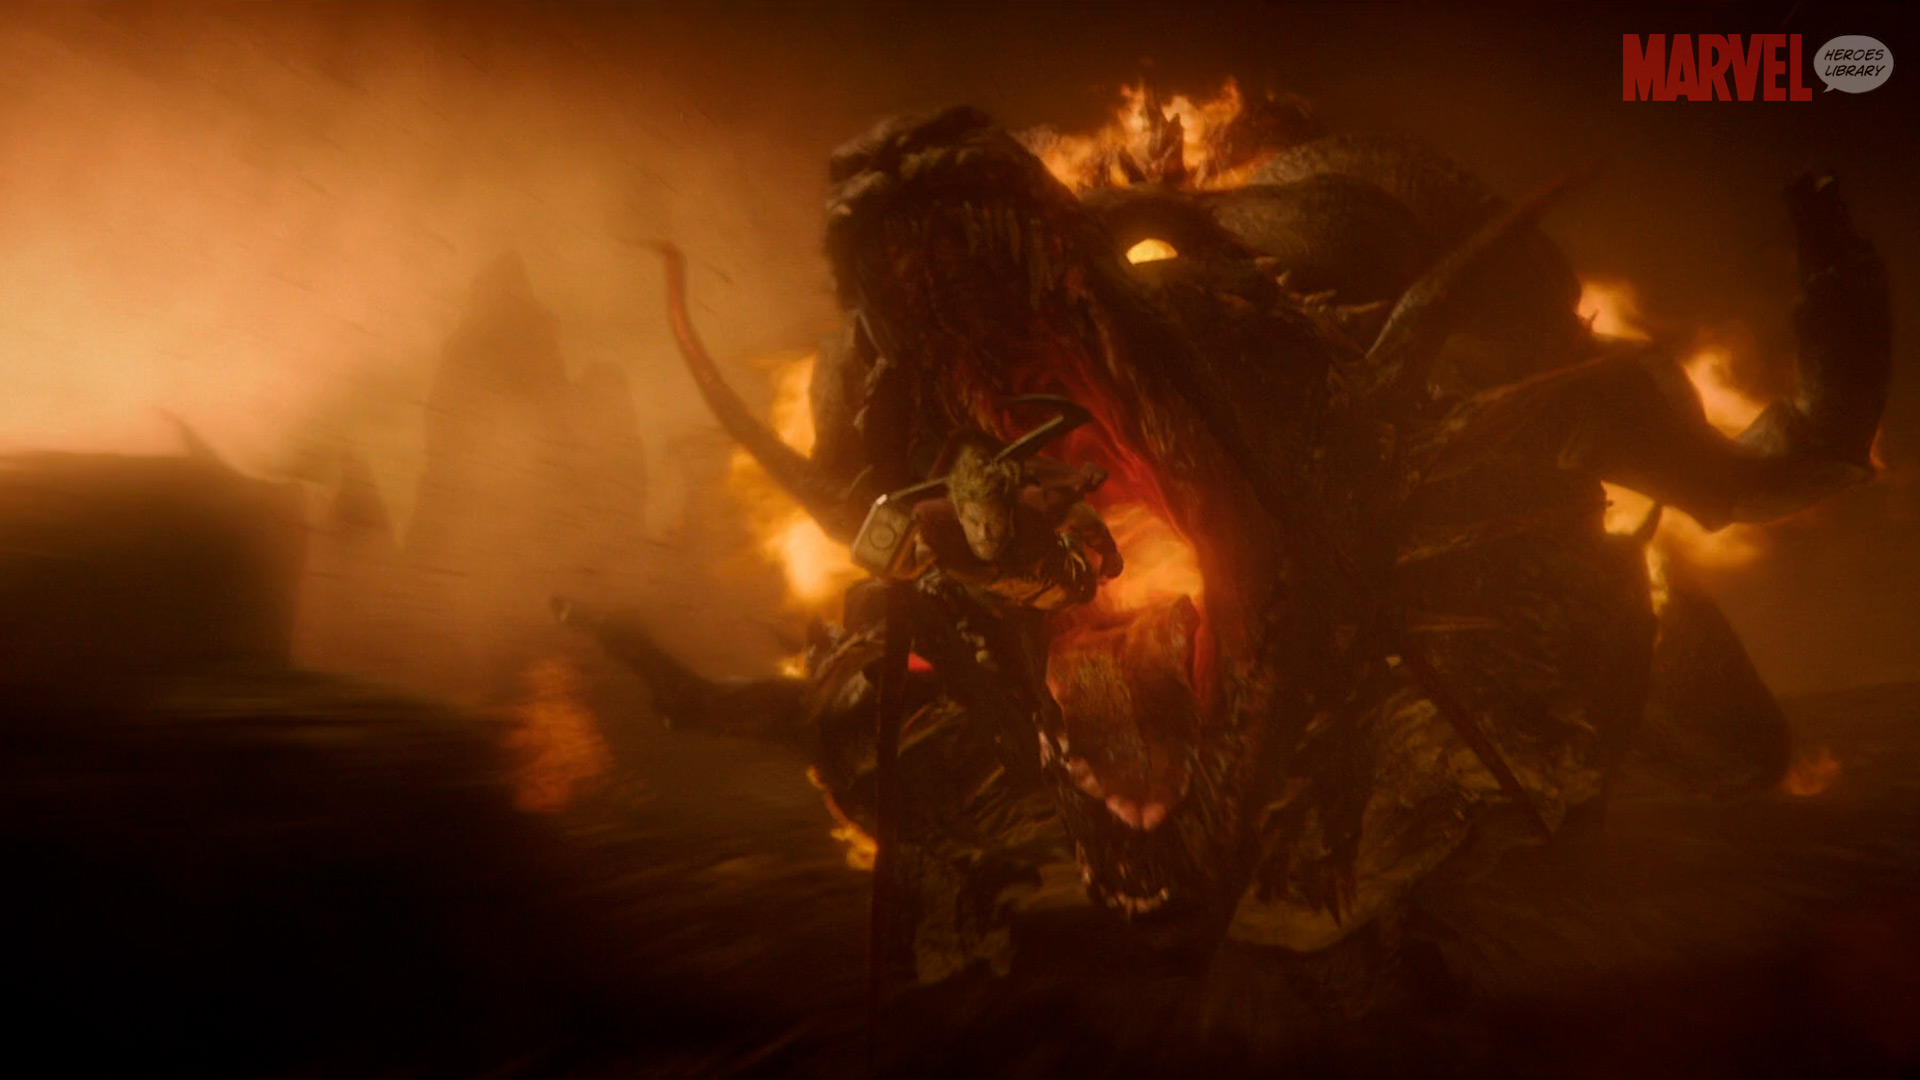 Chased by a Hellish Dragon (Ragnarok) HD Wallpaper